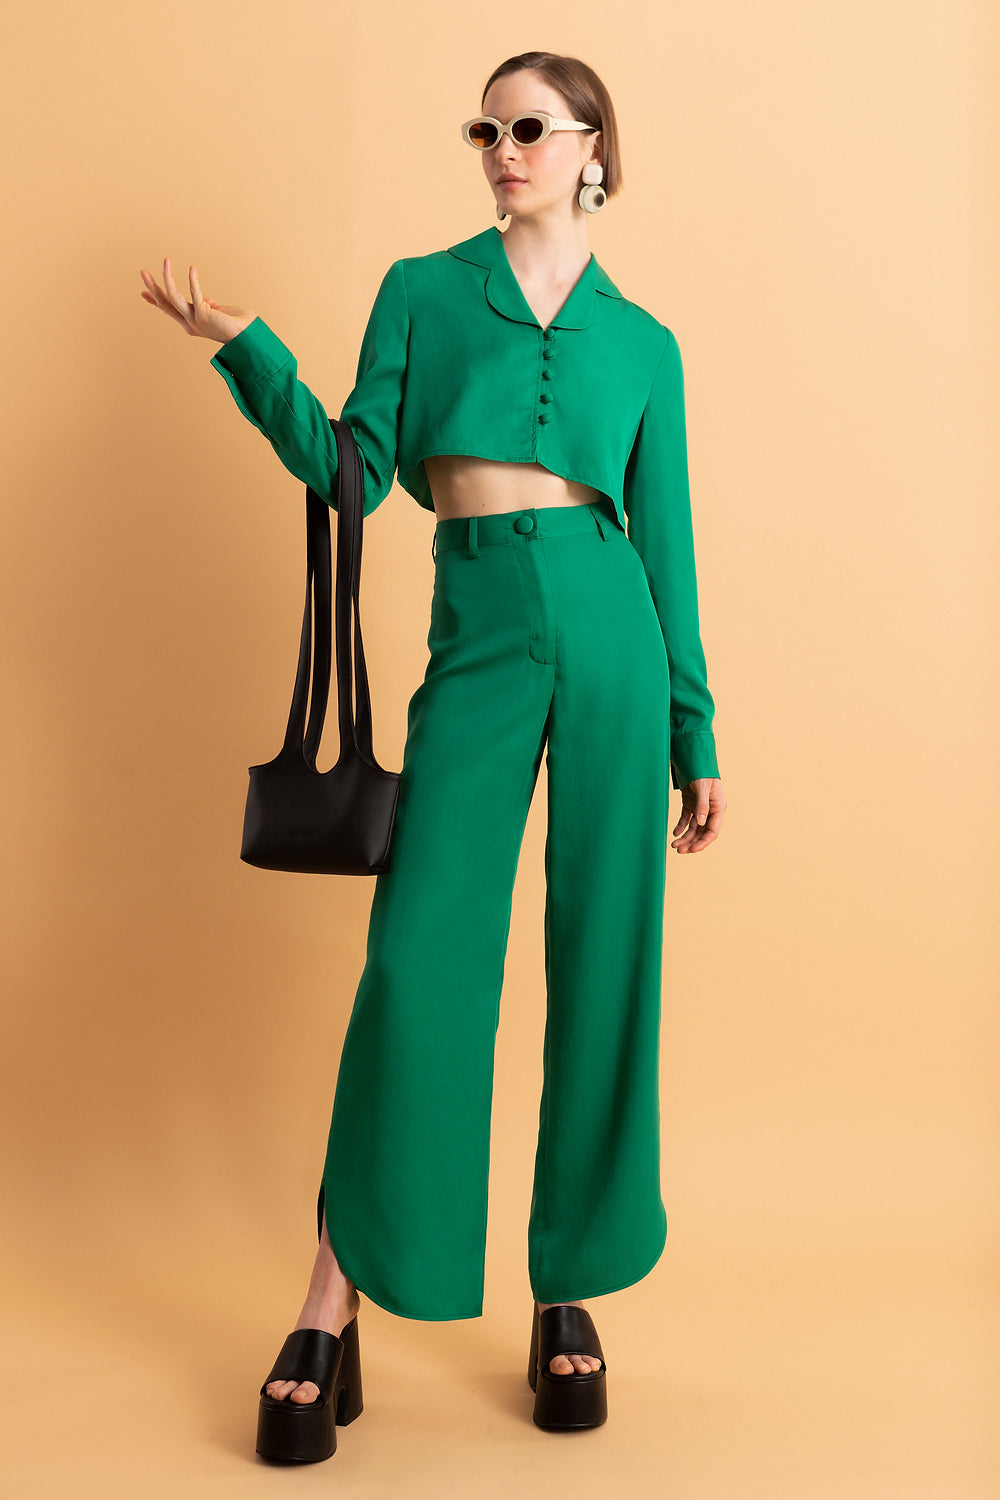 Donna Button-Up | Emerald Green